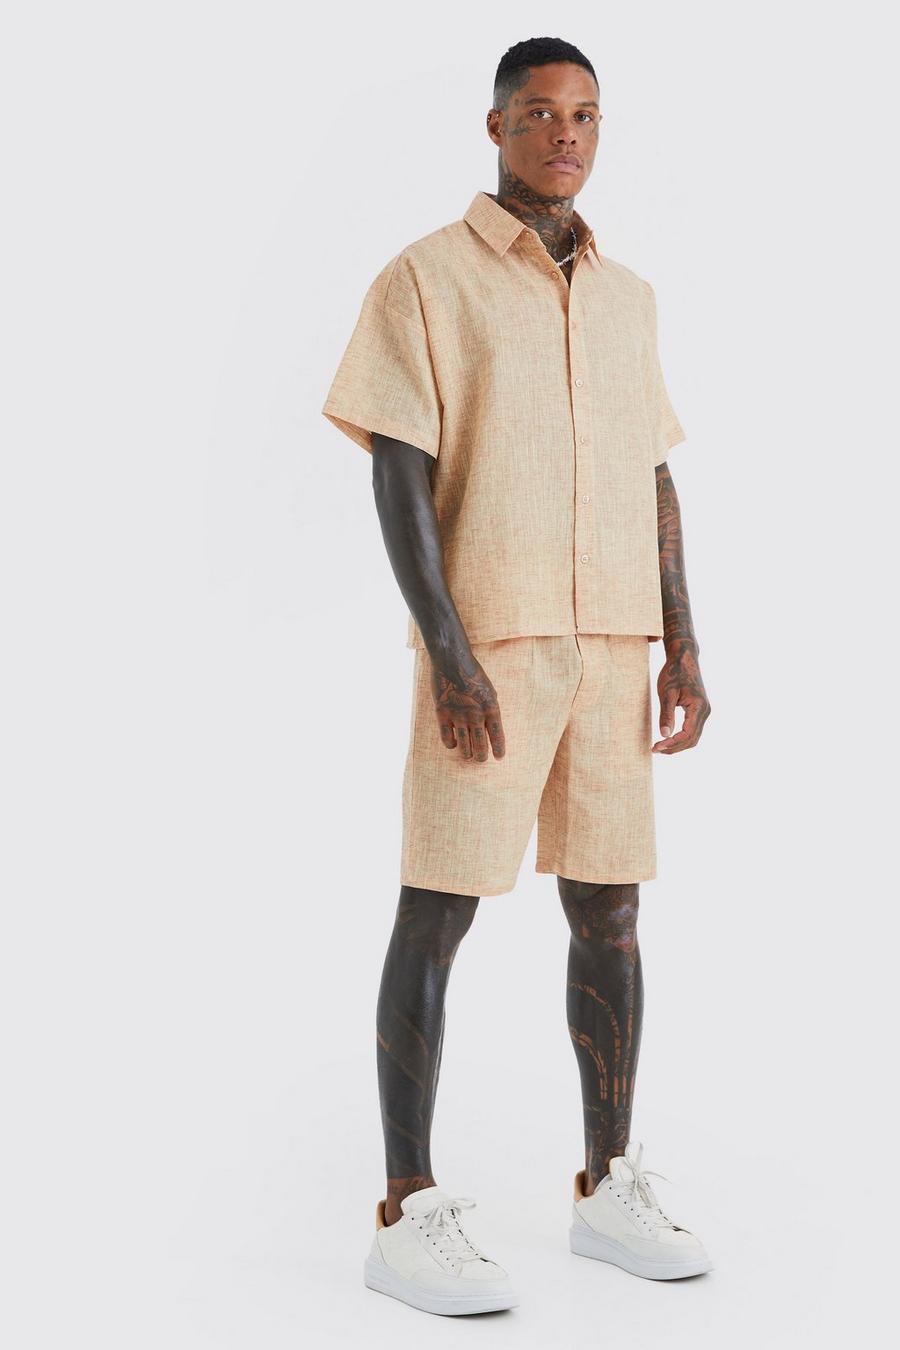 Chocolate Short Sleeve Boxy Linen Look Shirt And Short